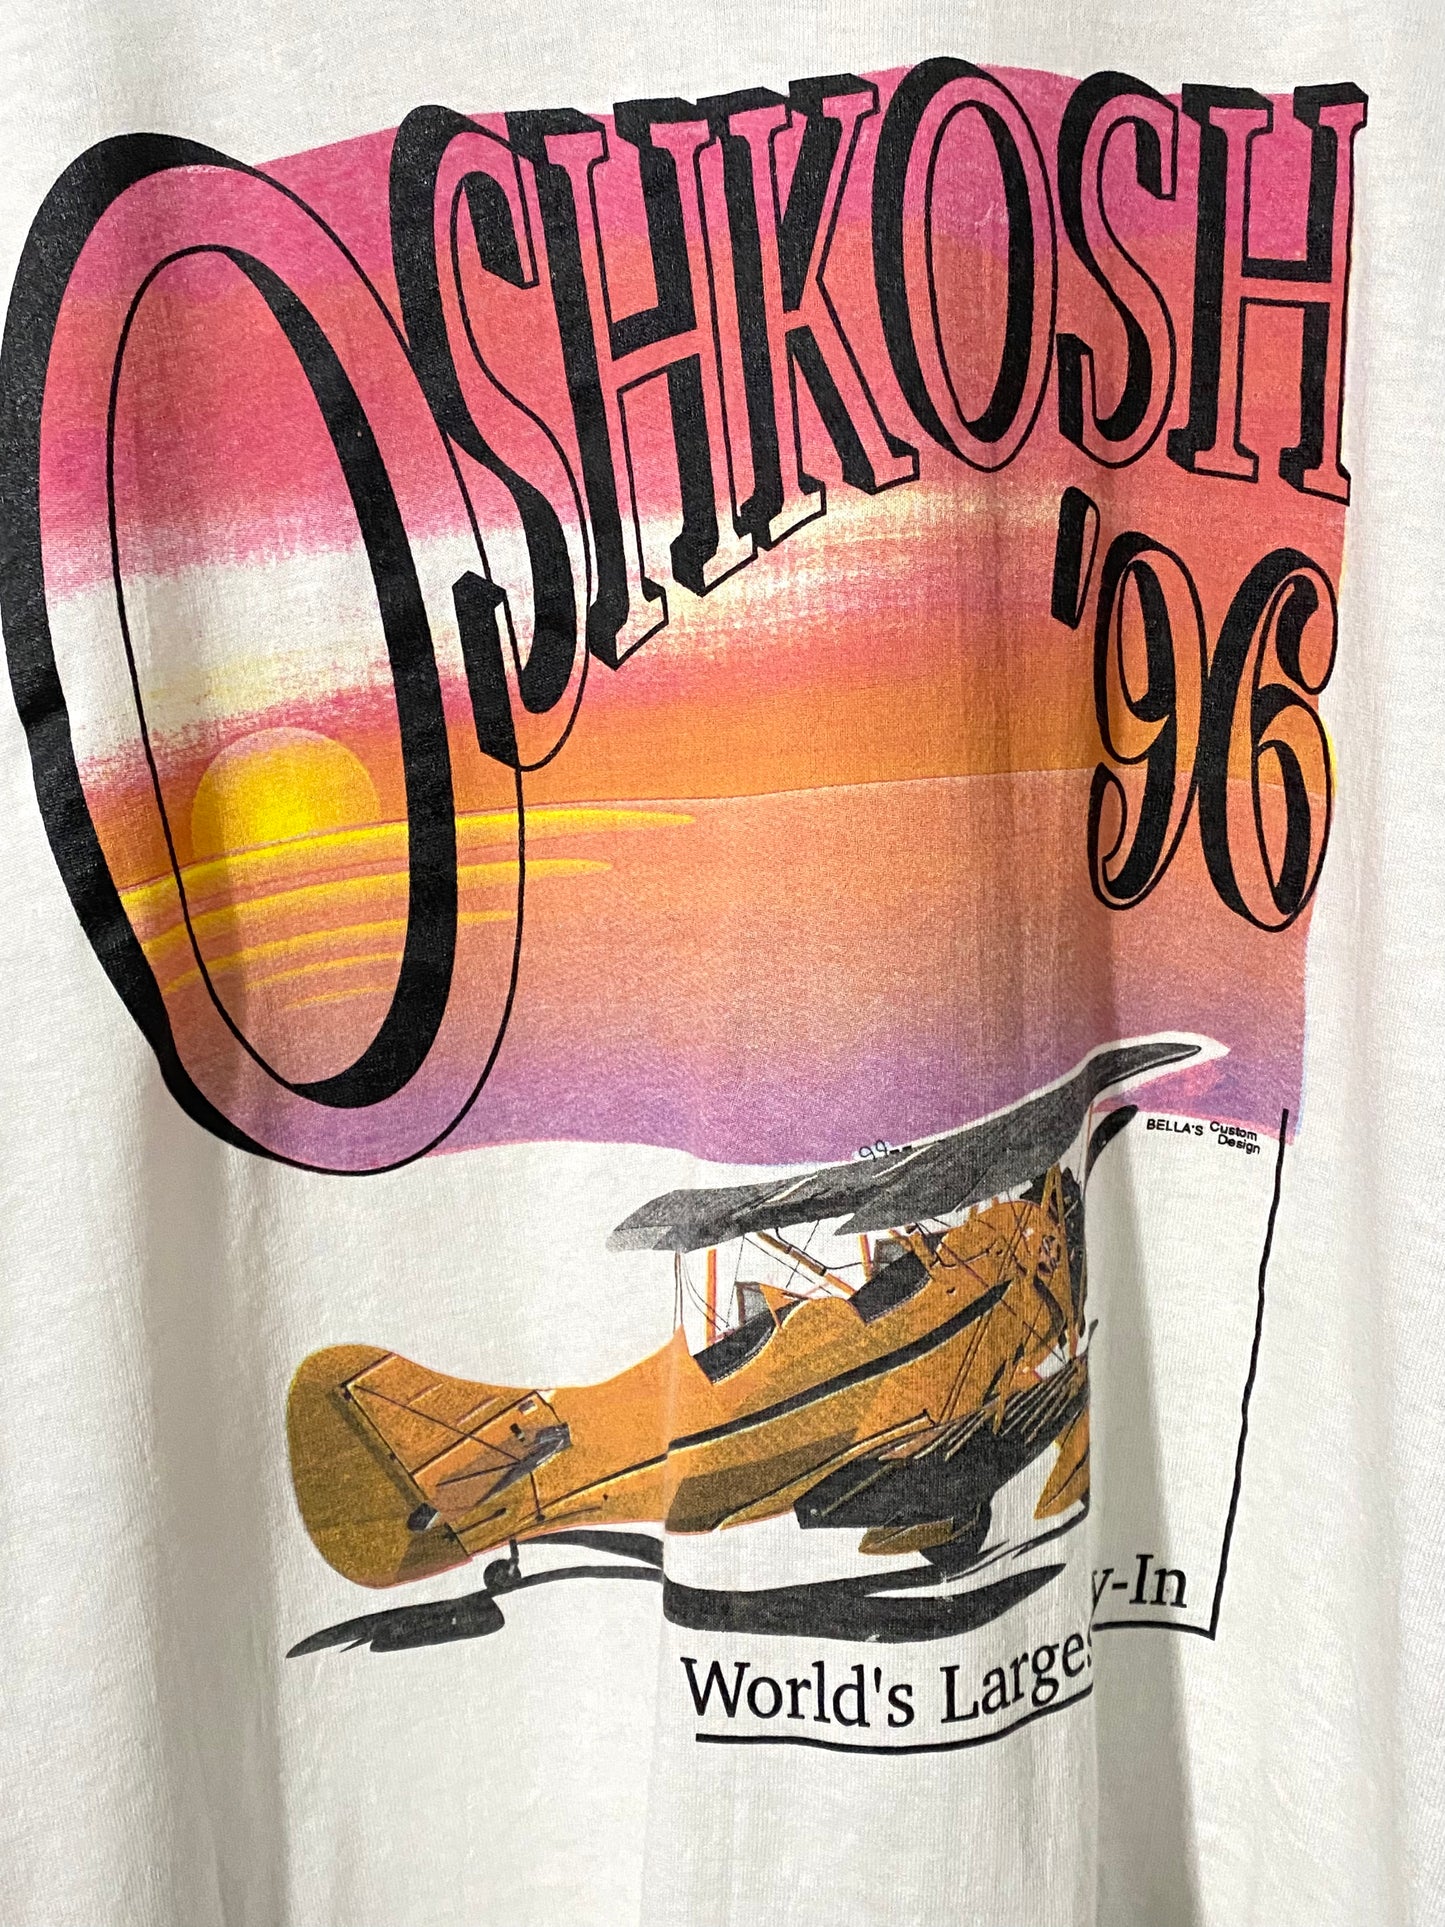 OshKosh Aviation Sunset WHT 96' Single Stitch